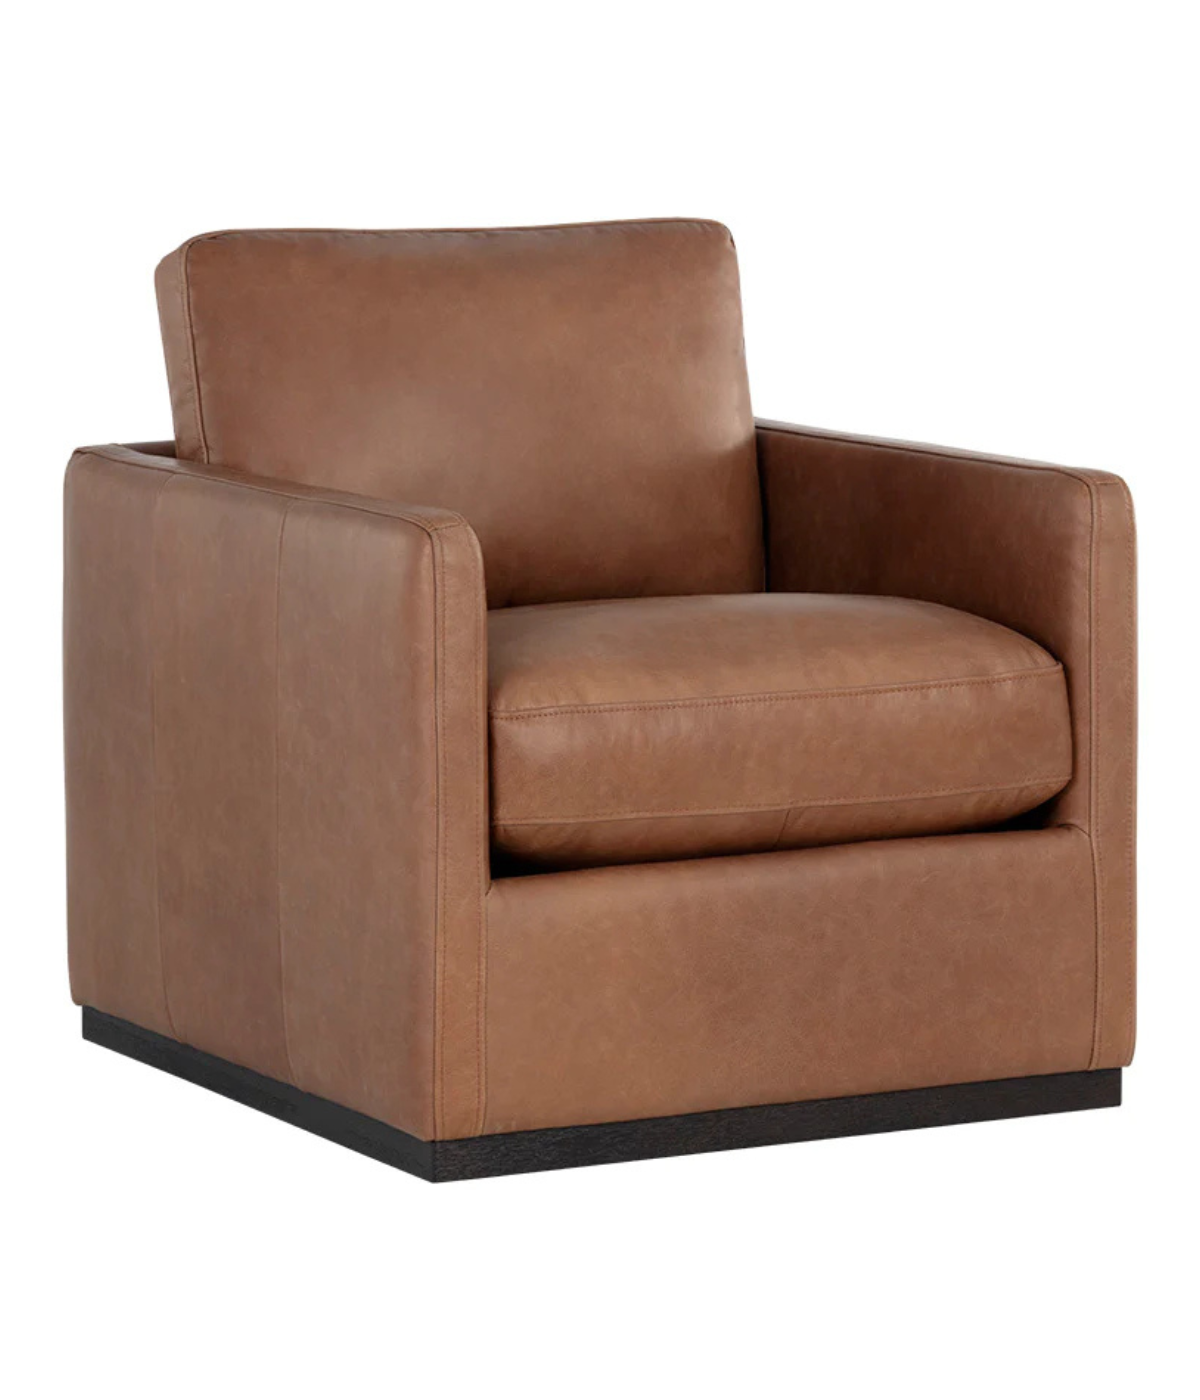 Portman Swivel Lounge Chair